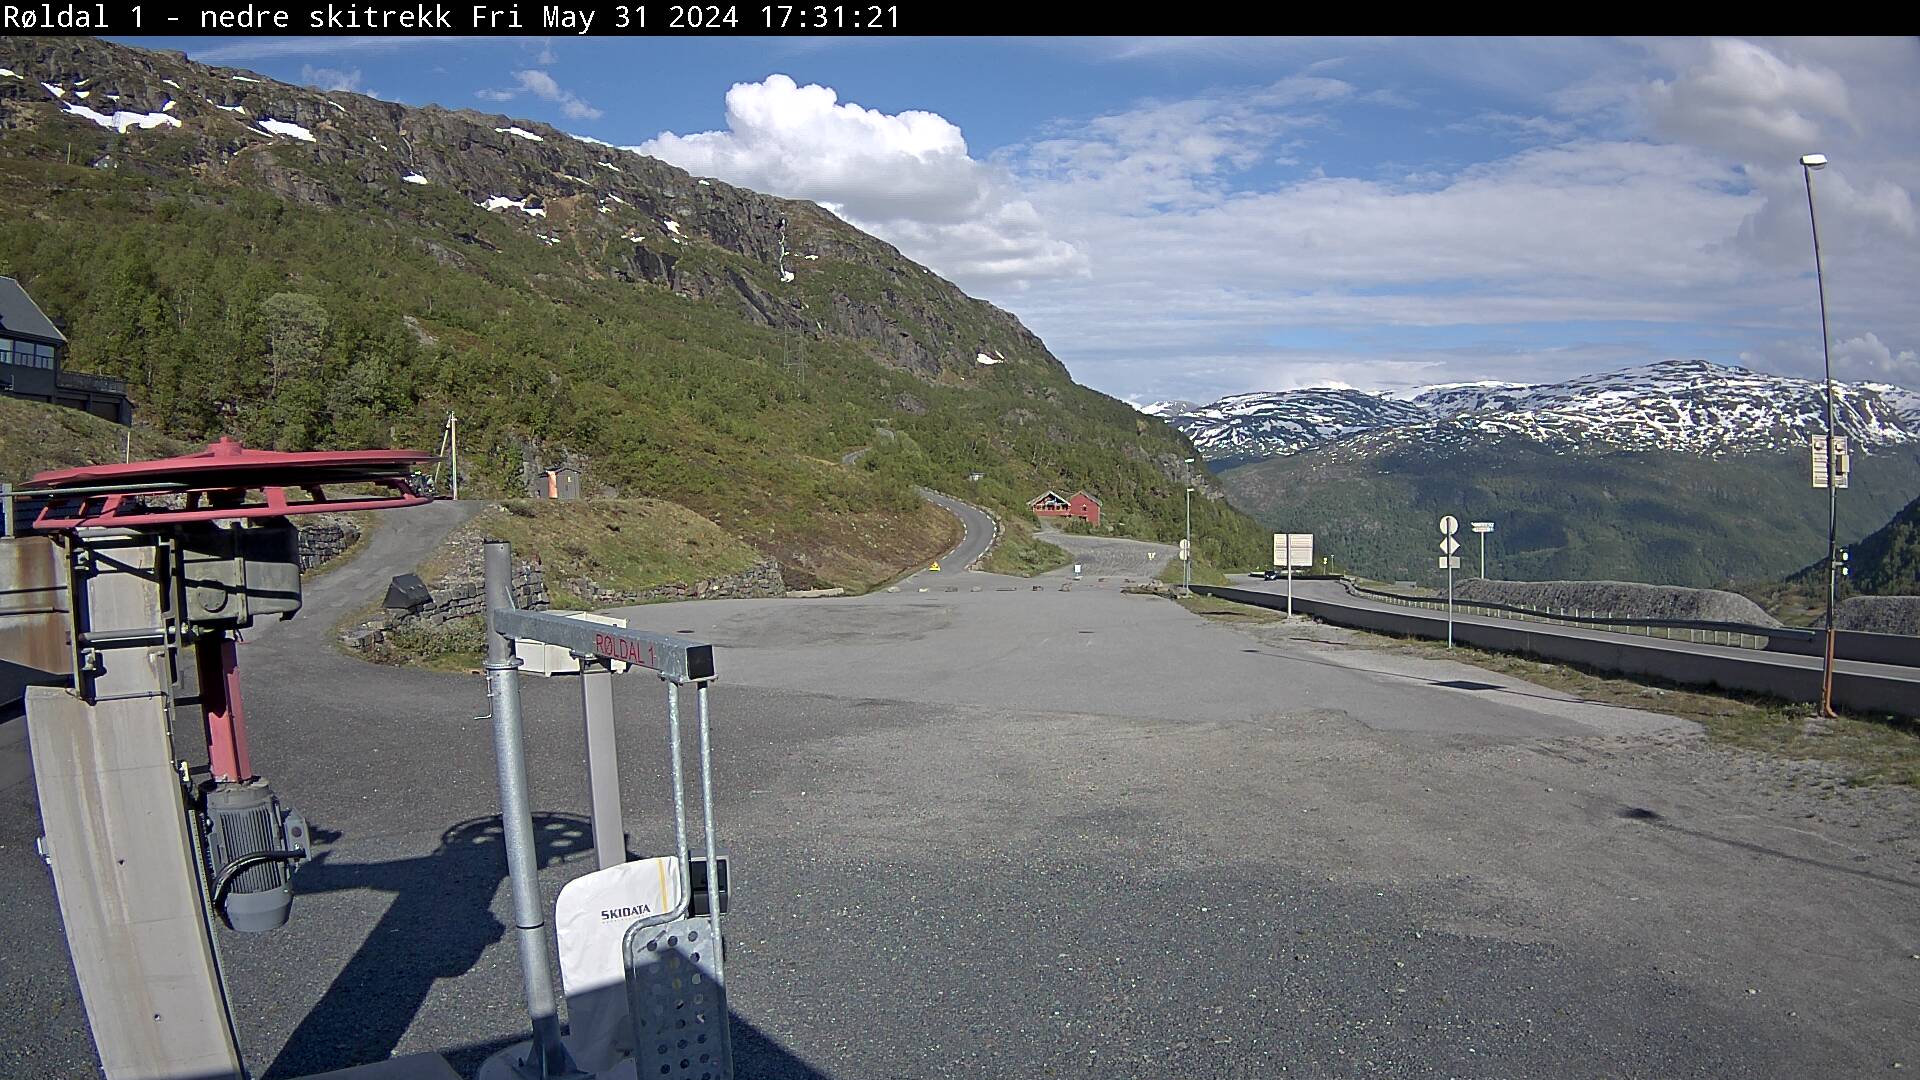 Webcam Røldal skisenter, Odda, Hordaland, Norwegen